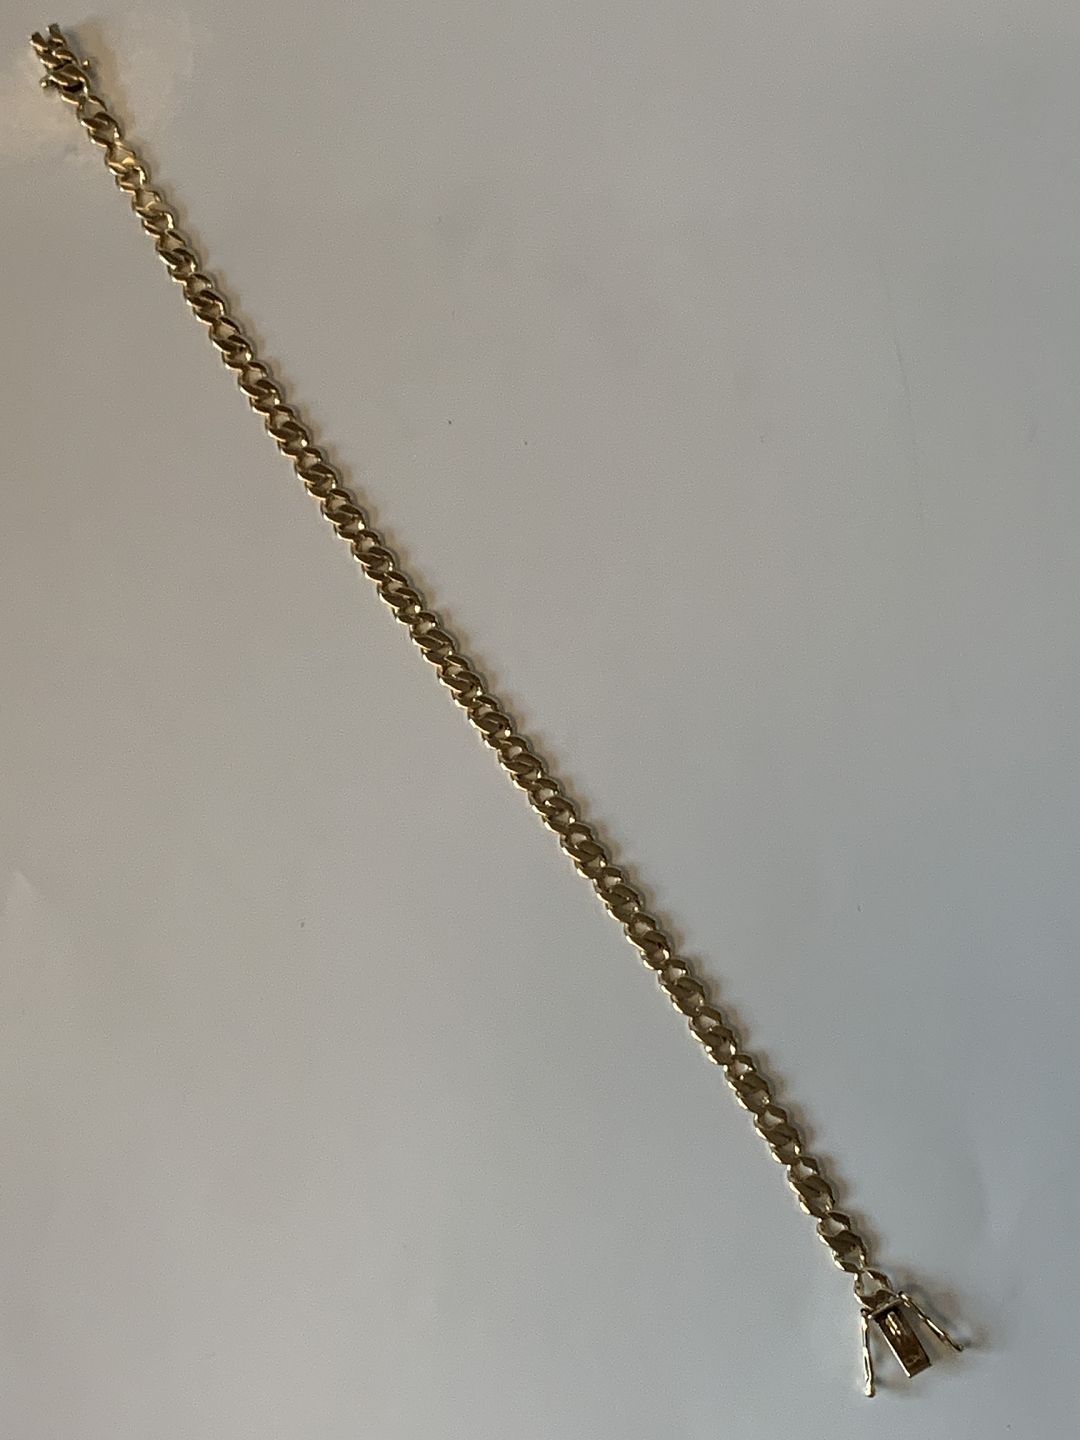 KAD - Panser Armbånd 14 karat guld Stemplet BH 585 * Længde 21,5 * Brede 5,01 mm - Panser Armbånd 14 karat guld * Stemplet BH * Længde 21,5 cm * Brede 5,01 mm